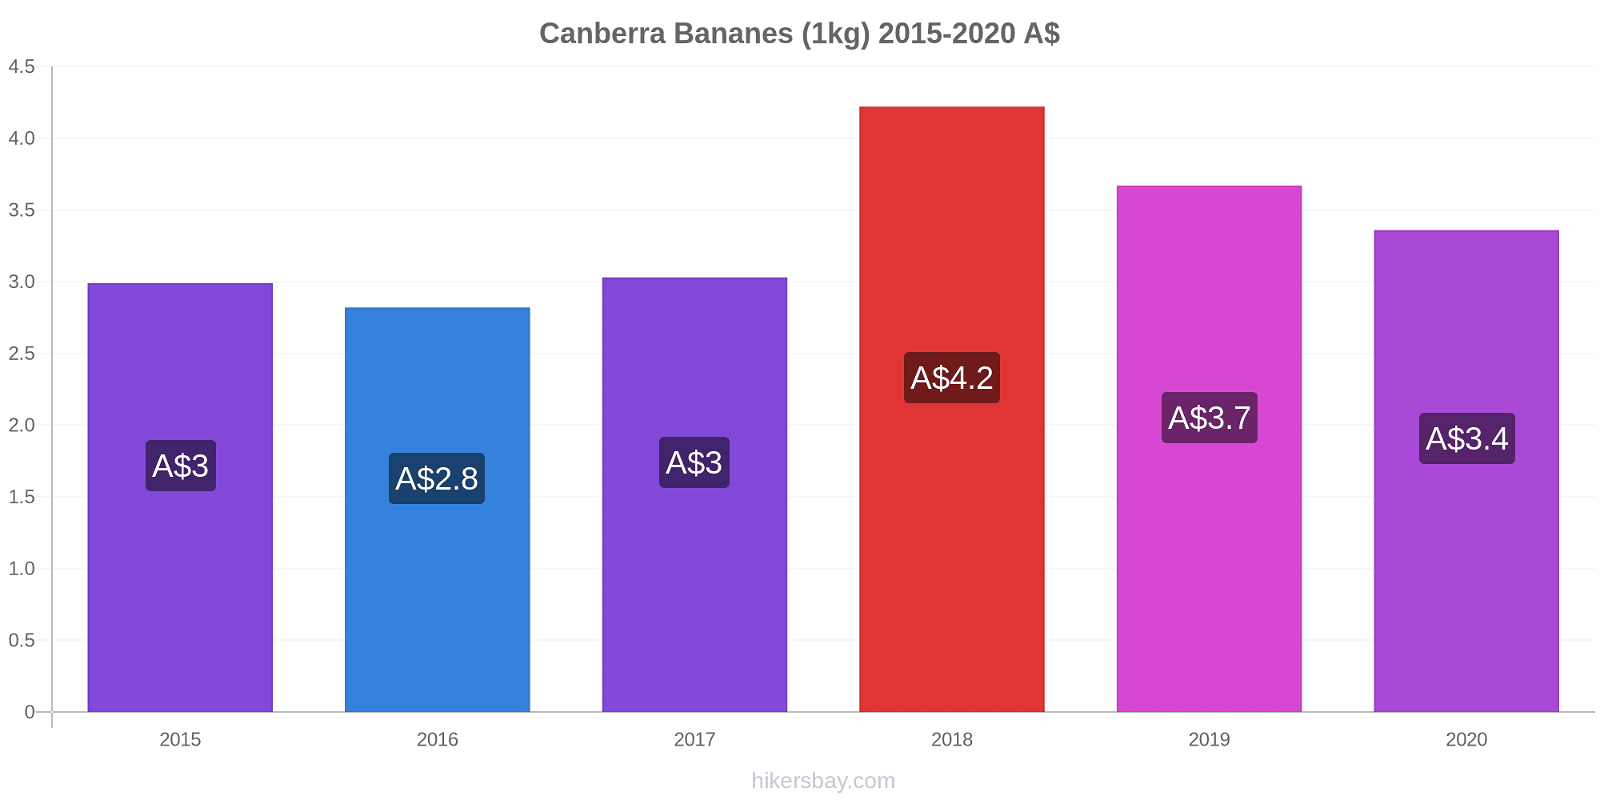 Canberra changements de prix Bananes (1kg) hikersbay.com